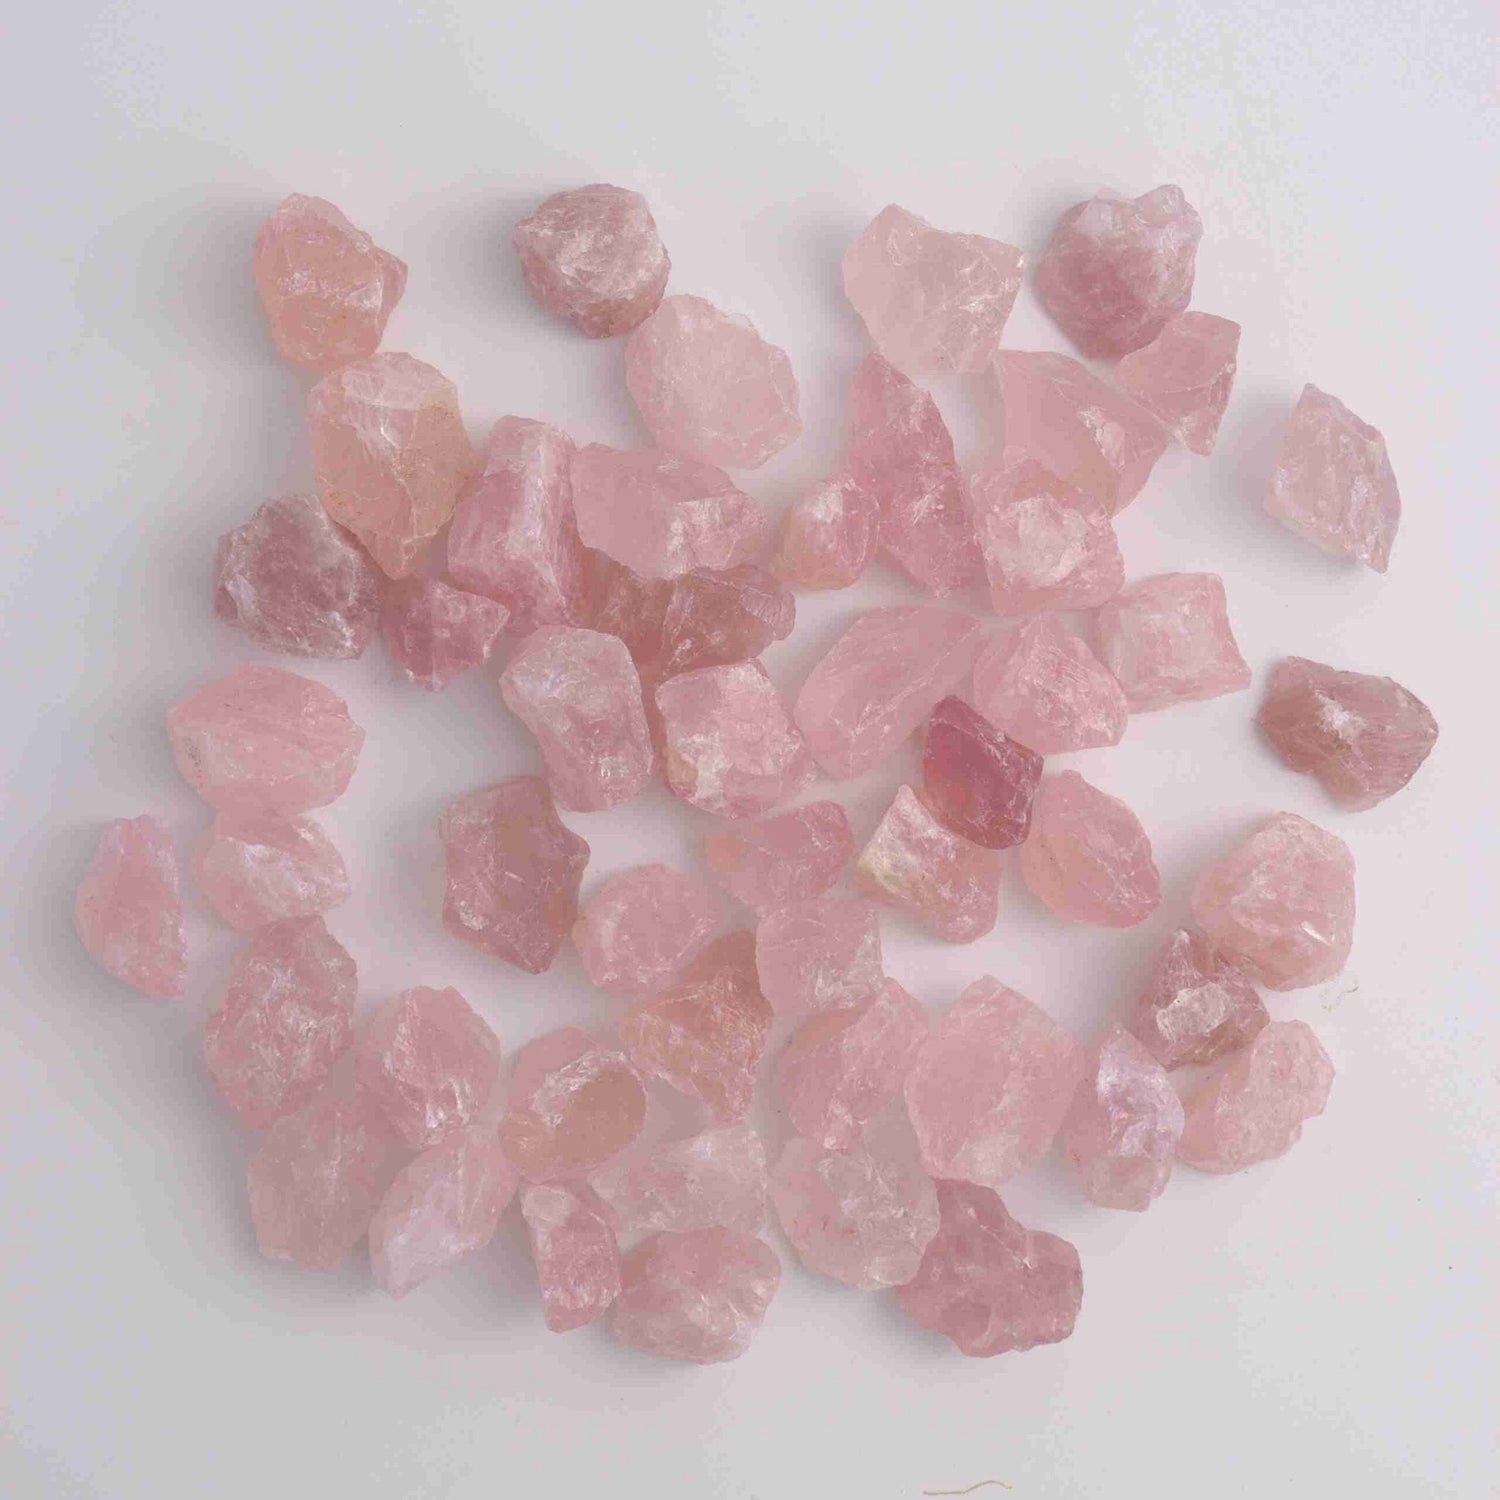 1kg Rough Rose Quartz - Mi Esperanza Minerals